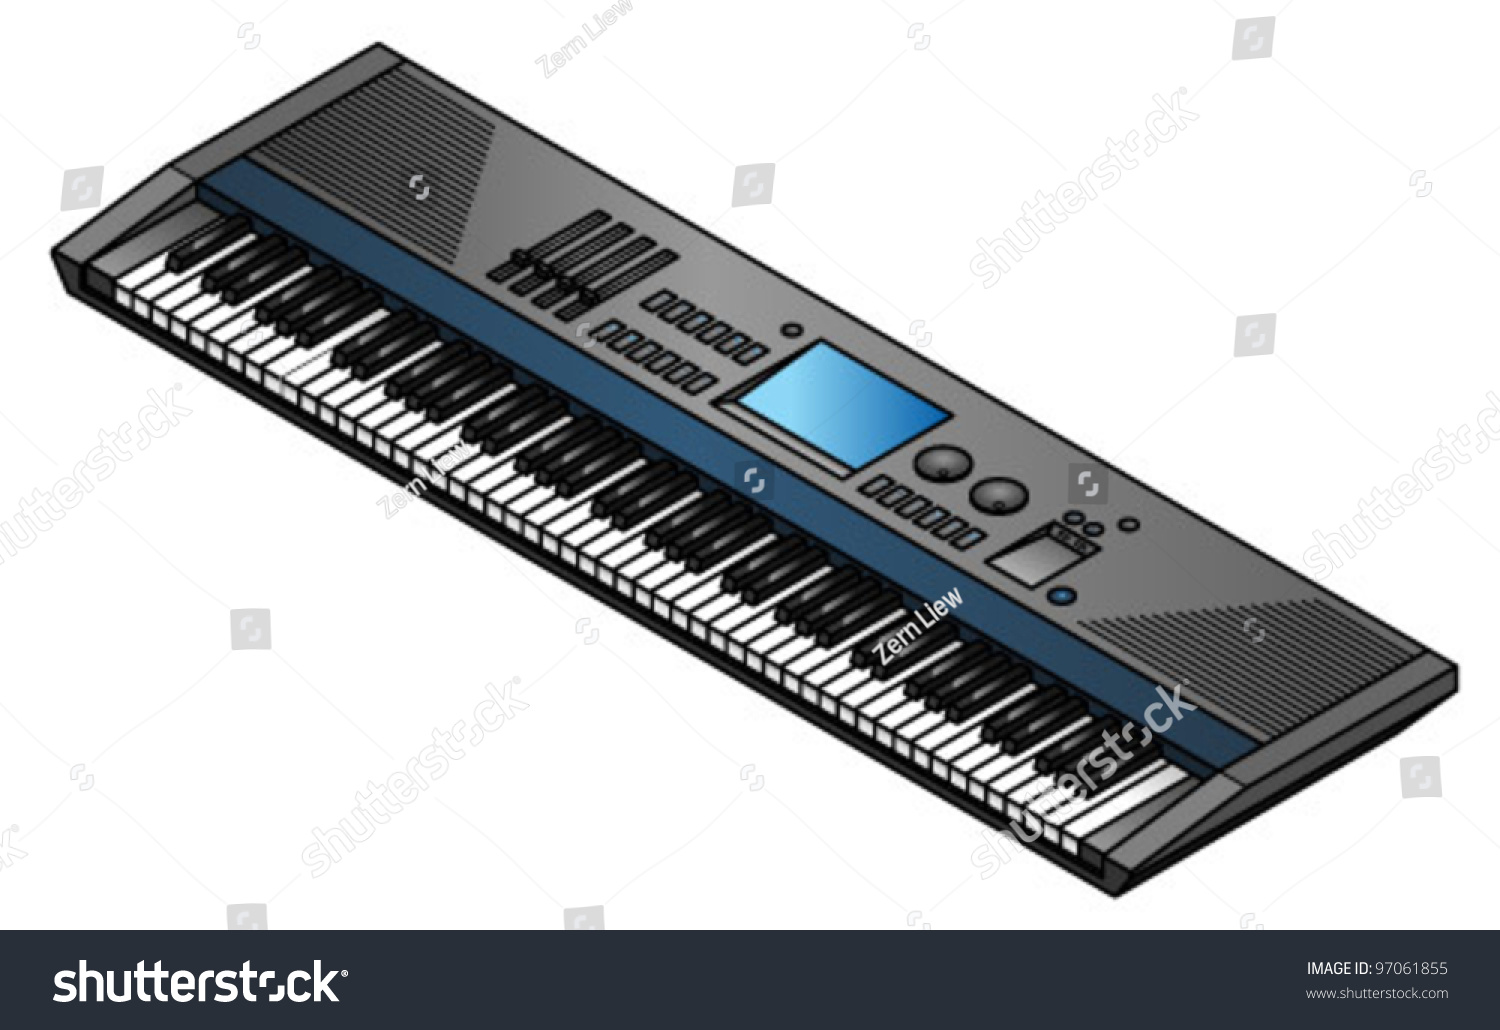 electronic keyboard clipart - photo #5